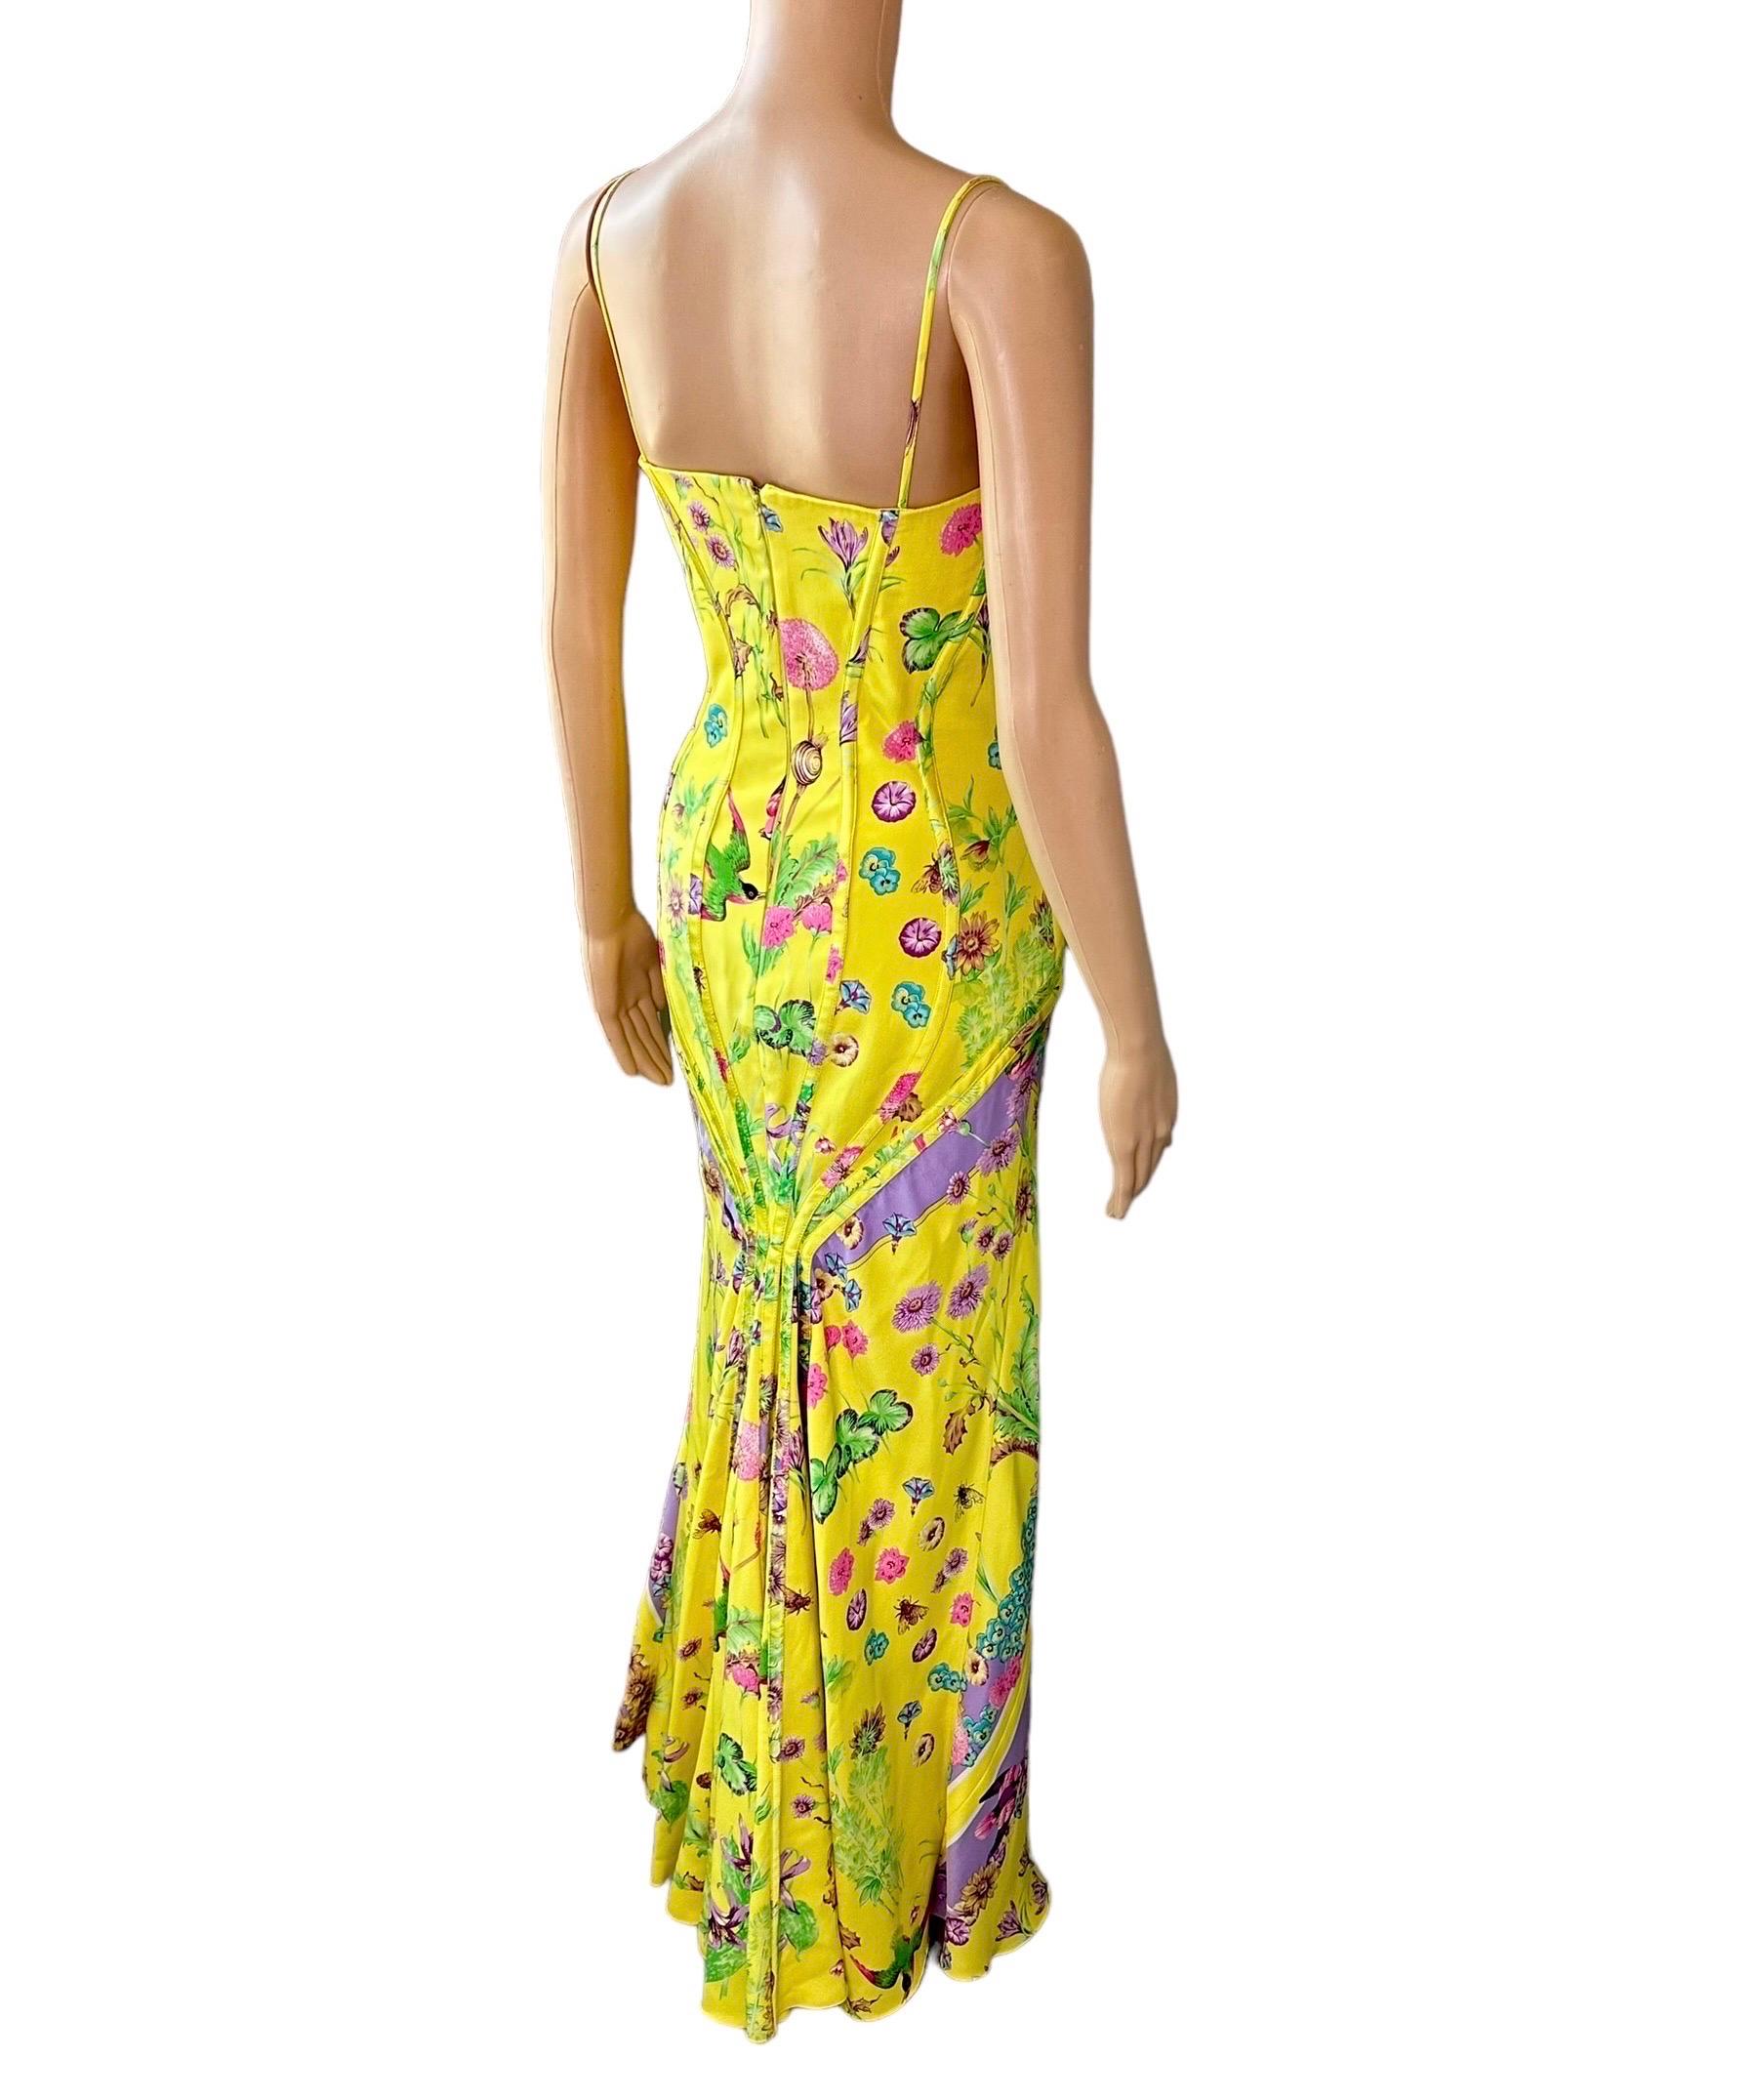 Versace S/S 2006 Bustier Corset Floral Print Evening Dress Gown 8